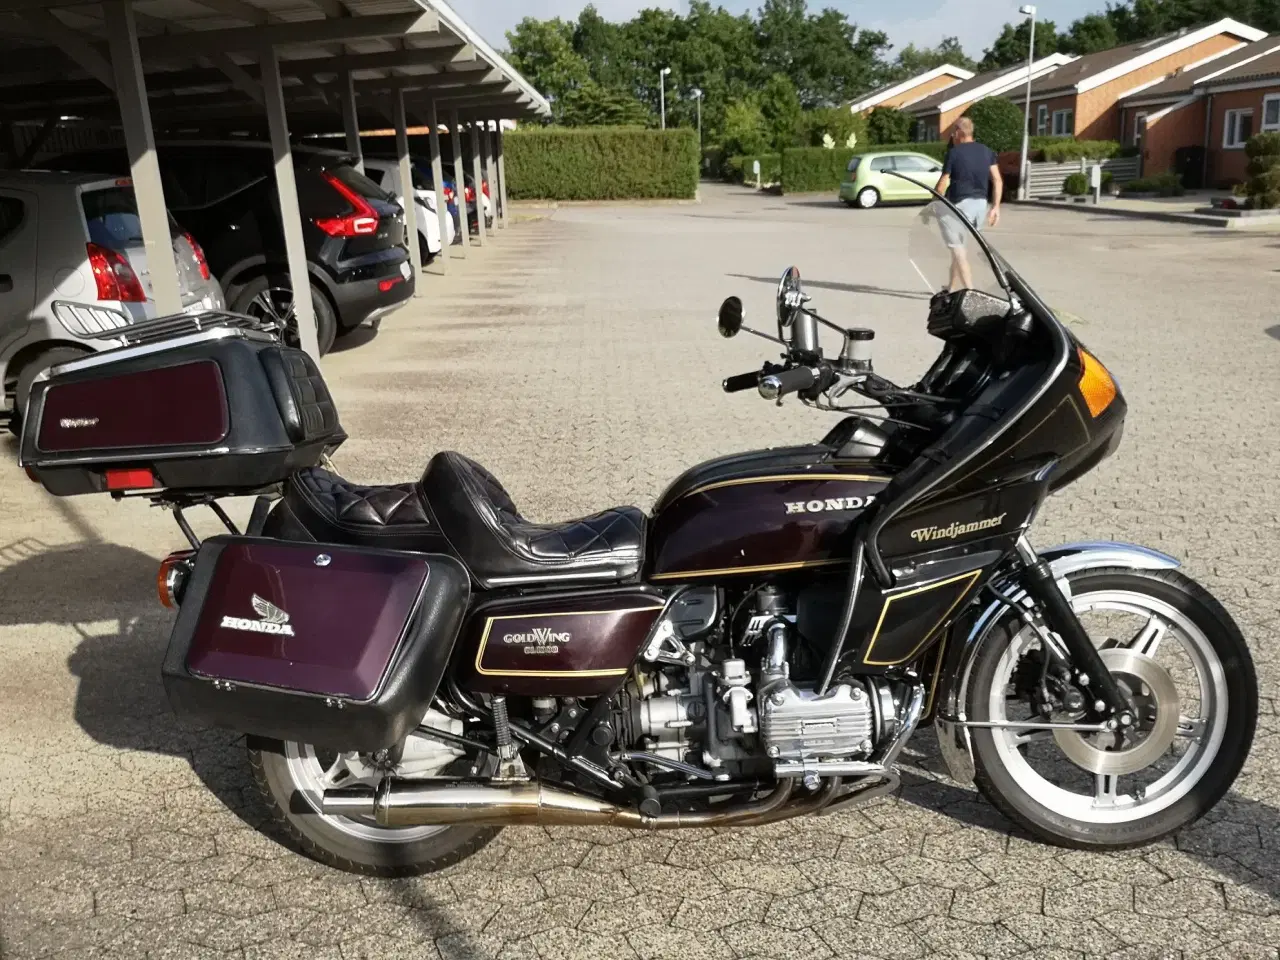 Billede 1 - Rigtig fin "veteran" motorcykel